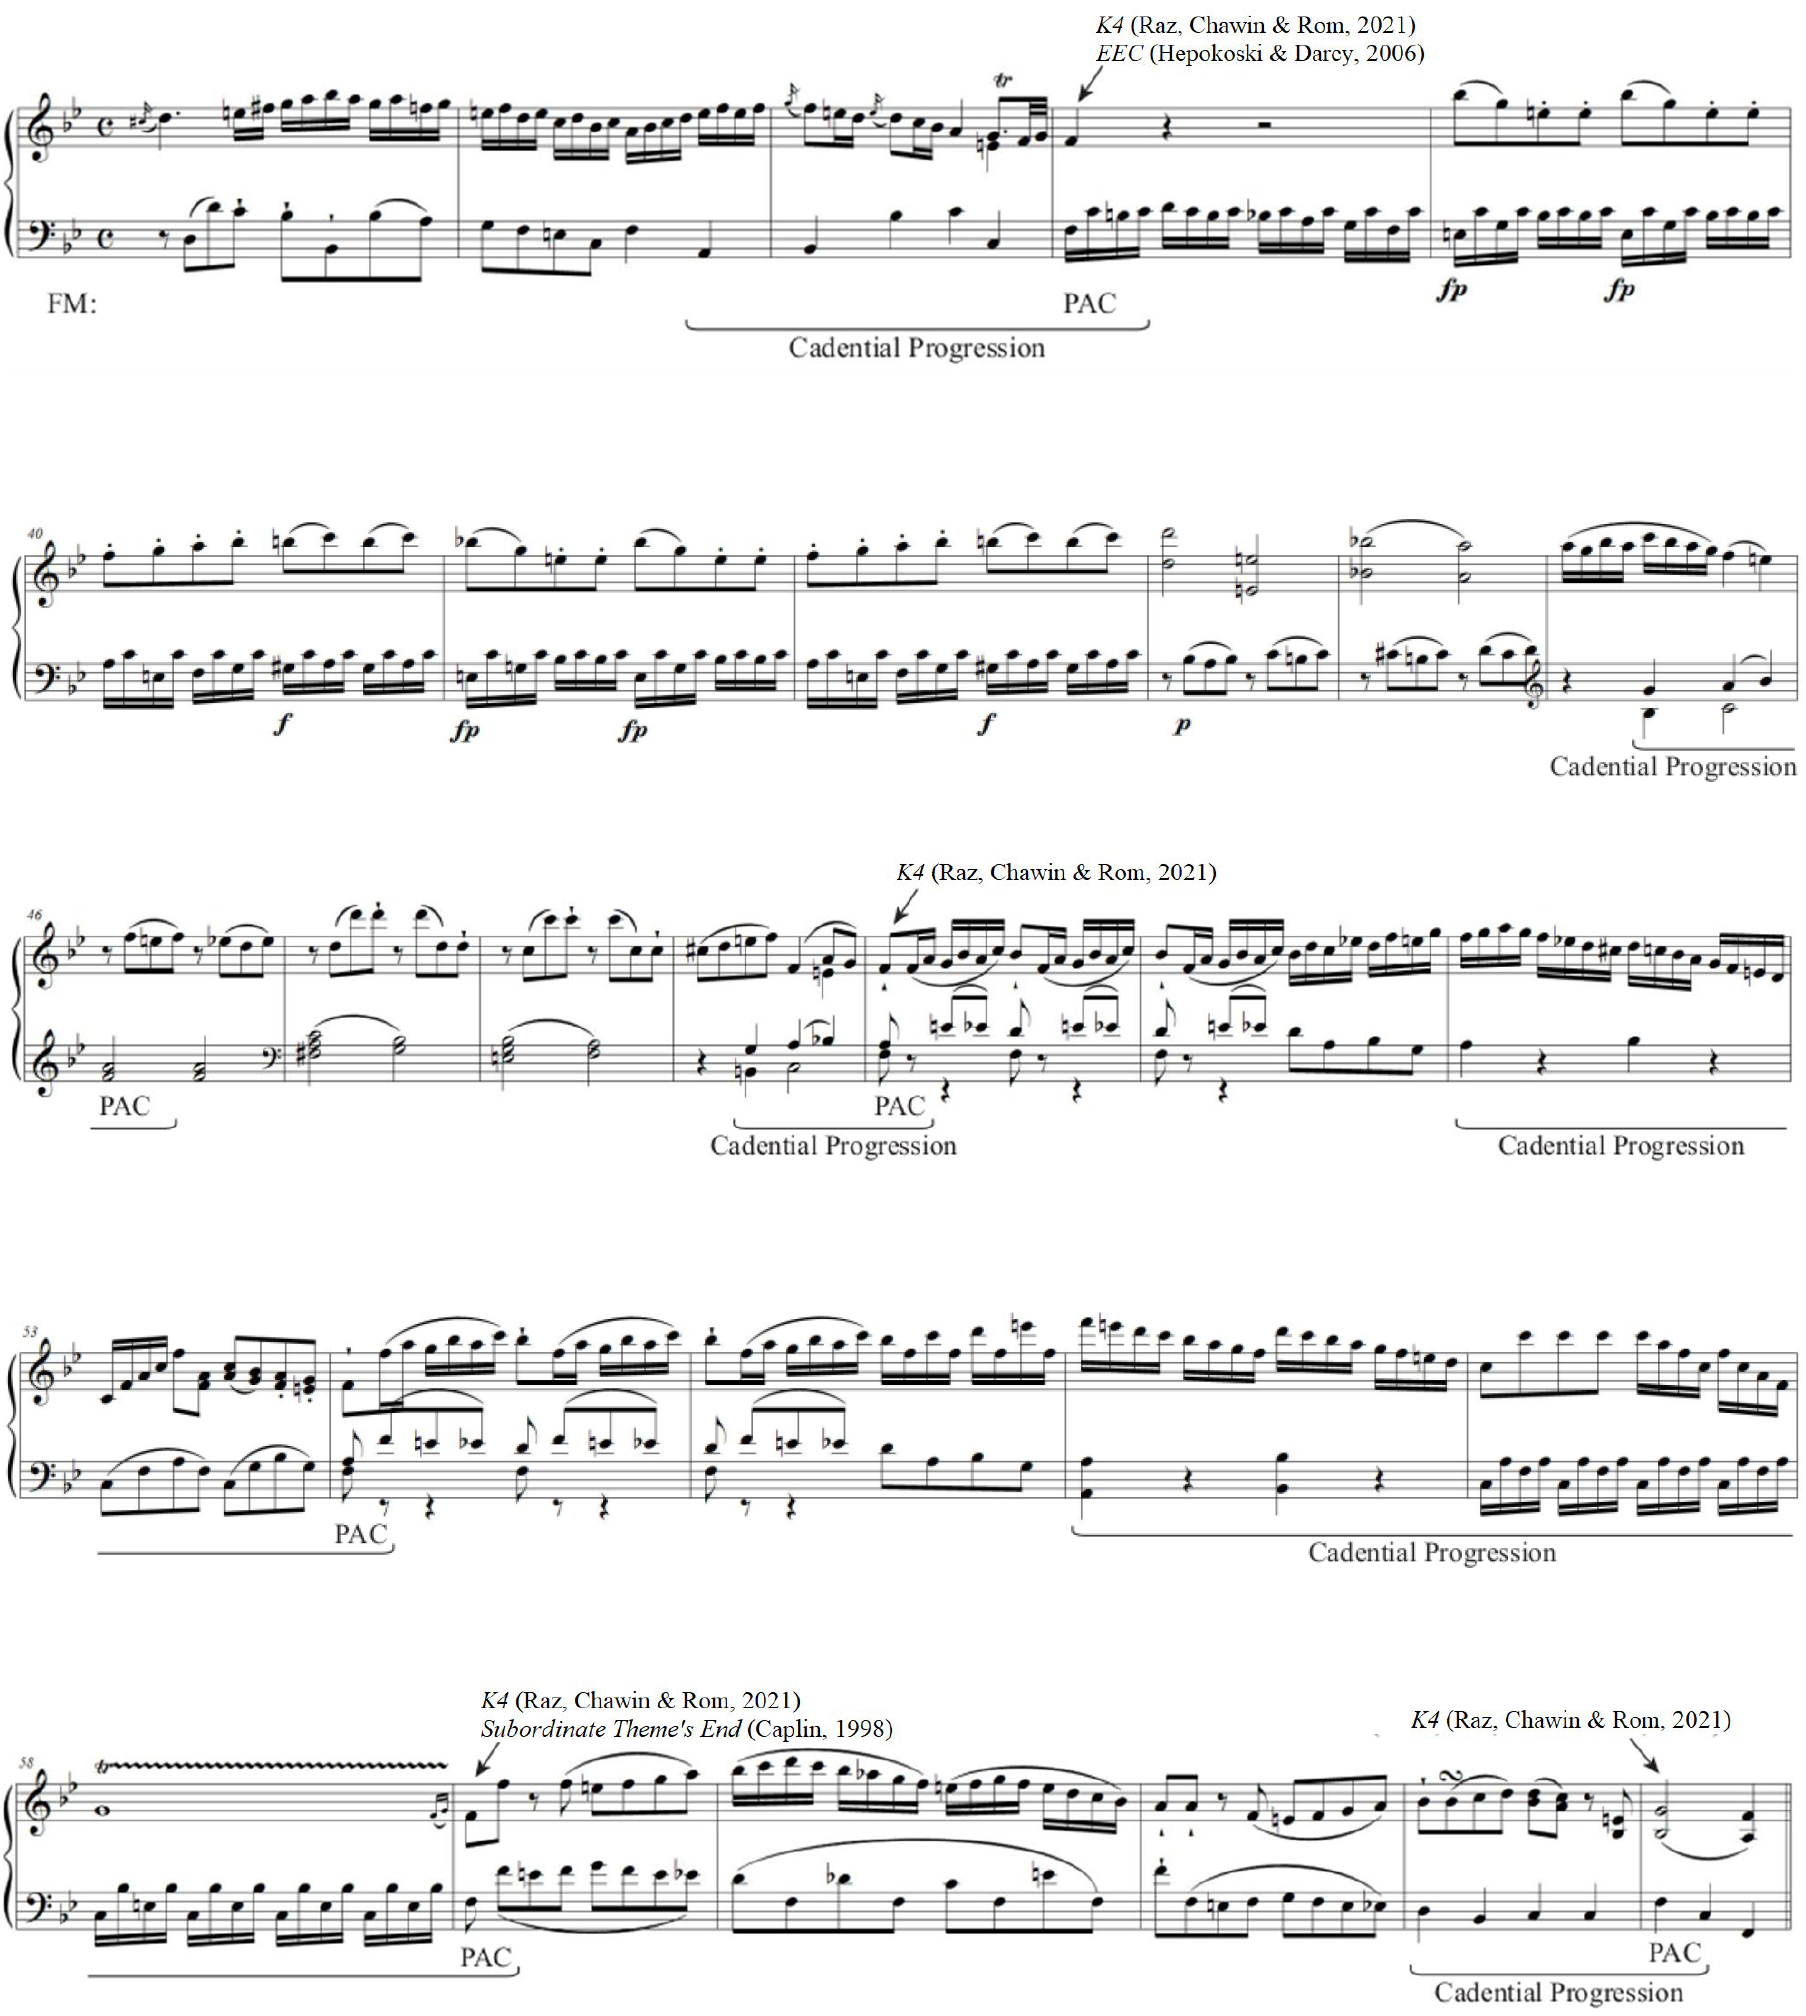 Sheet music showing perfect authentic cadences. More description below.